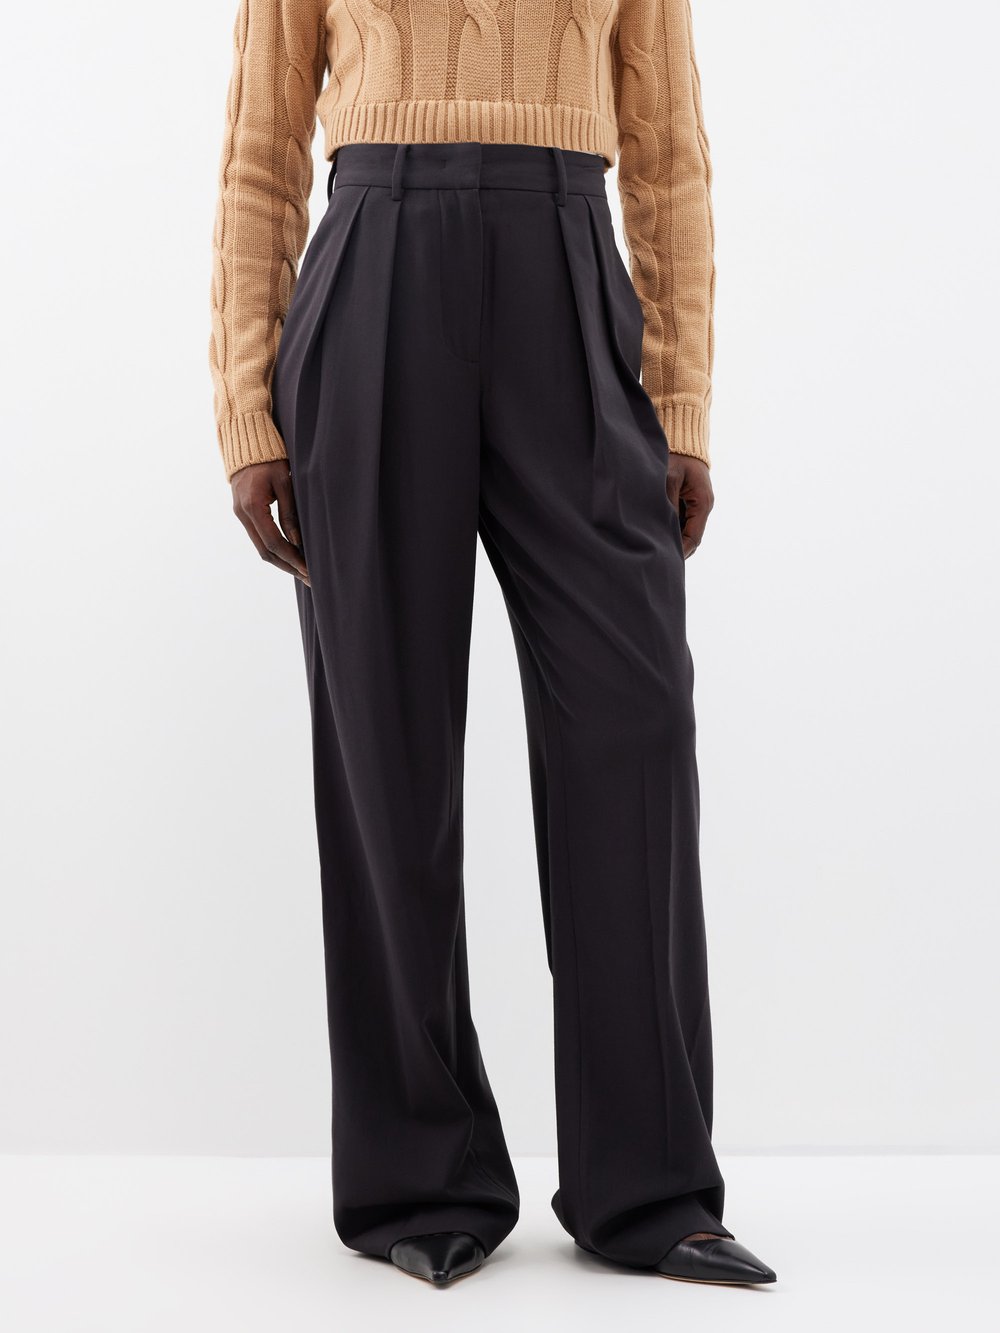 Luisa широкие брюки со складками Staud, черный staud x solid